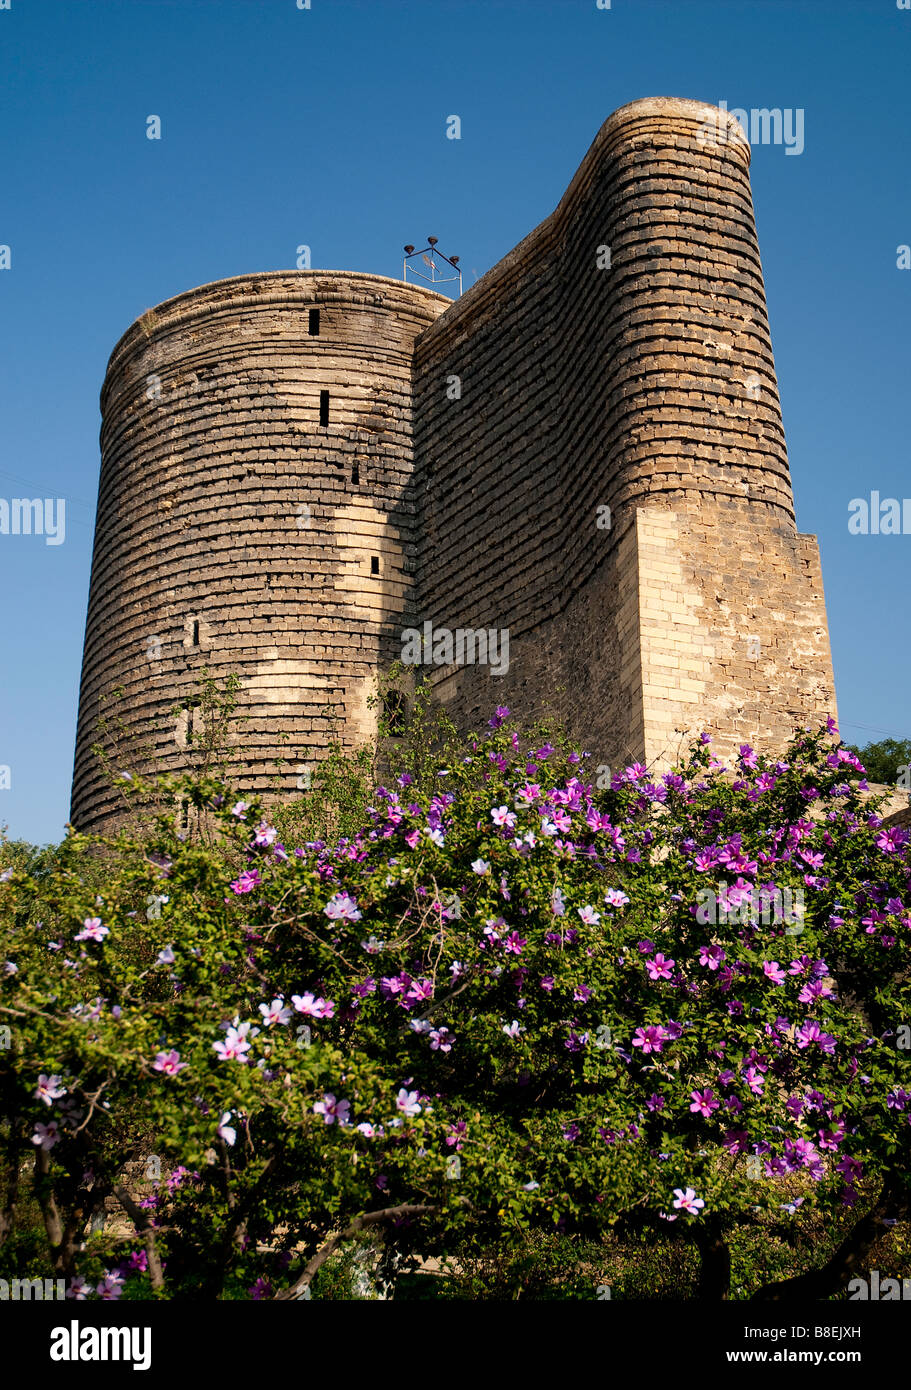 Jungfrauen Turm Baku Aserbaidschan Kaukasus Reisen Asien Europa Stockfoto